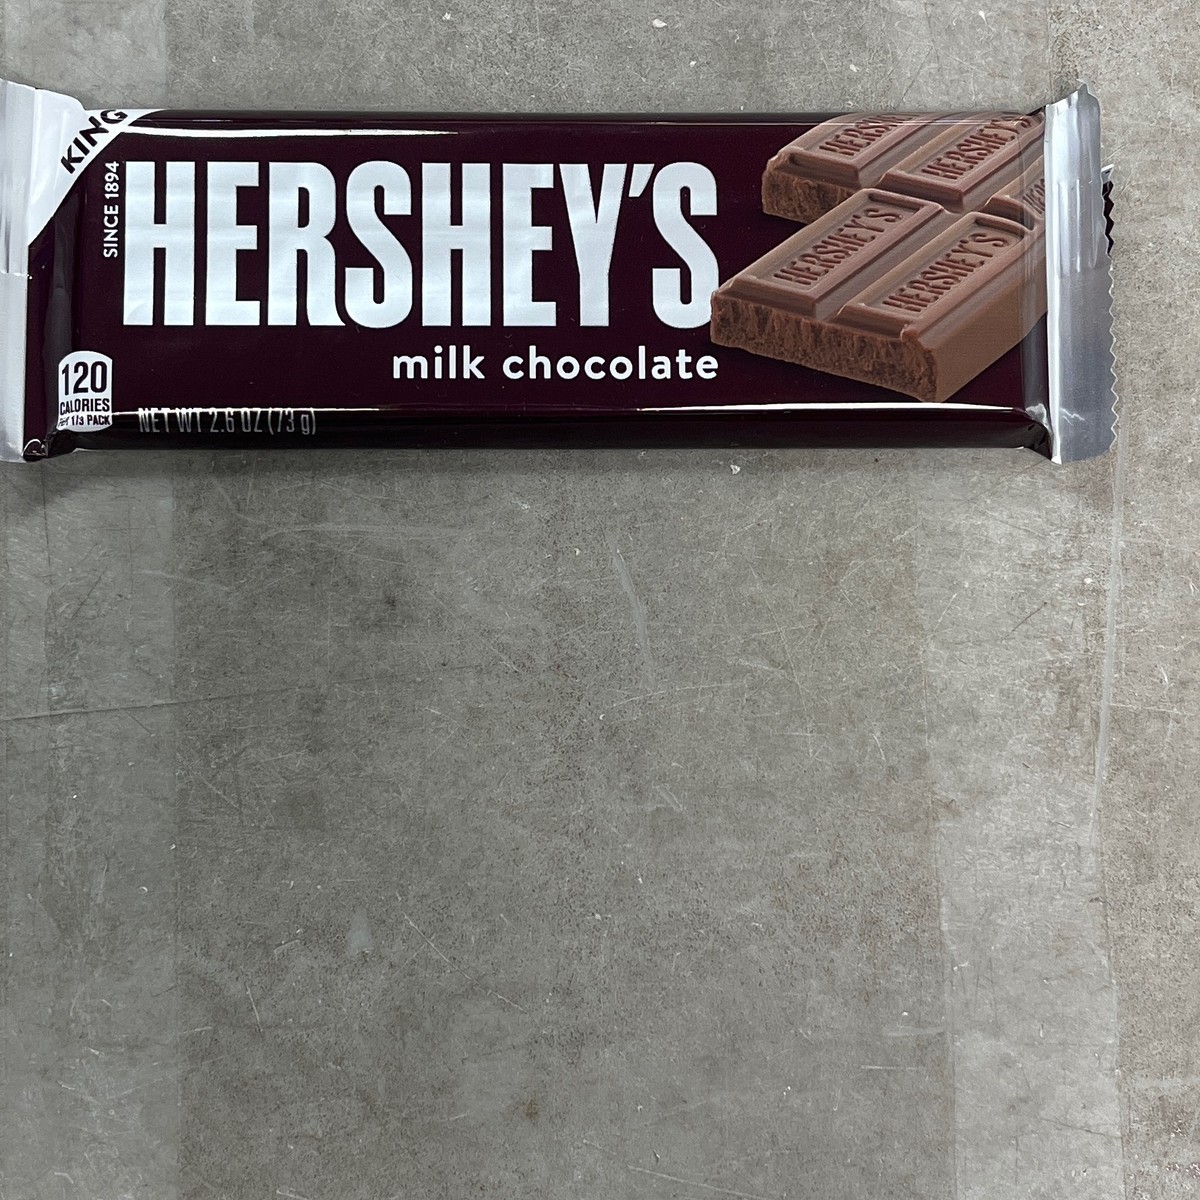 HERSHEY'S Milk Chocolate King Size Candy Bar, 2.6 oz